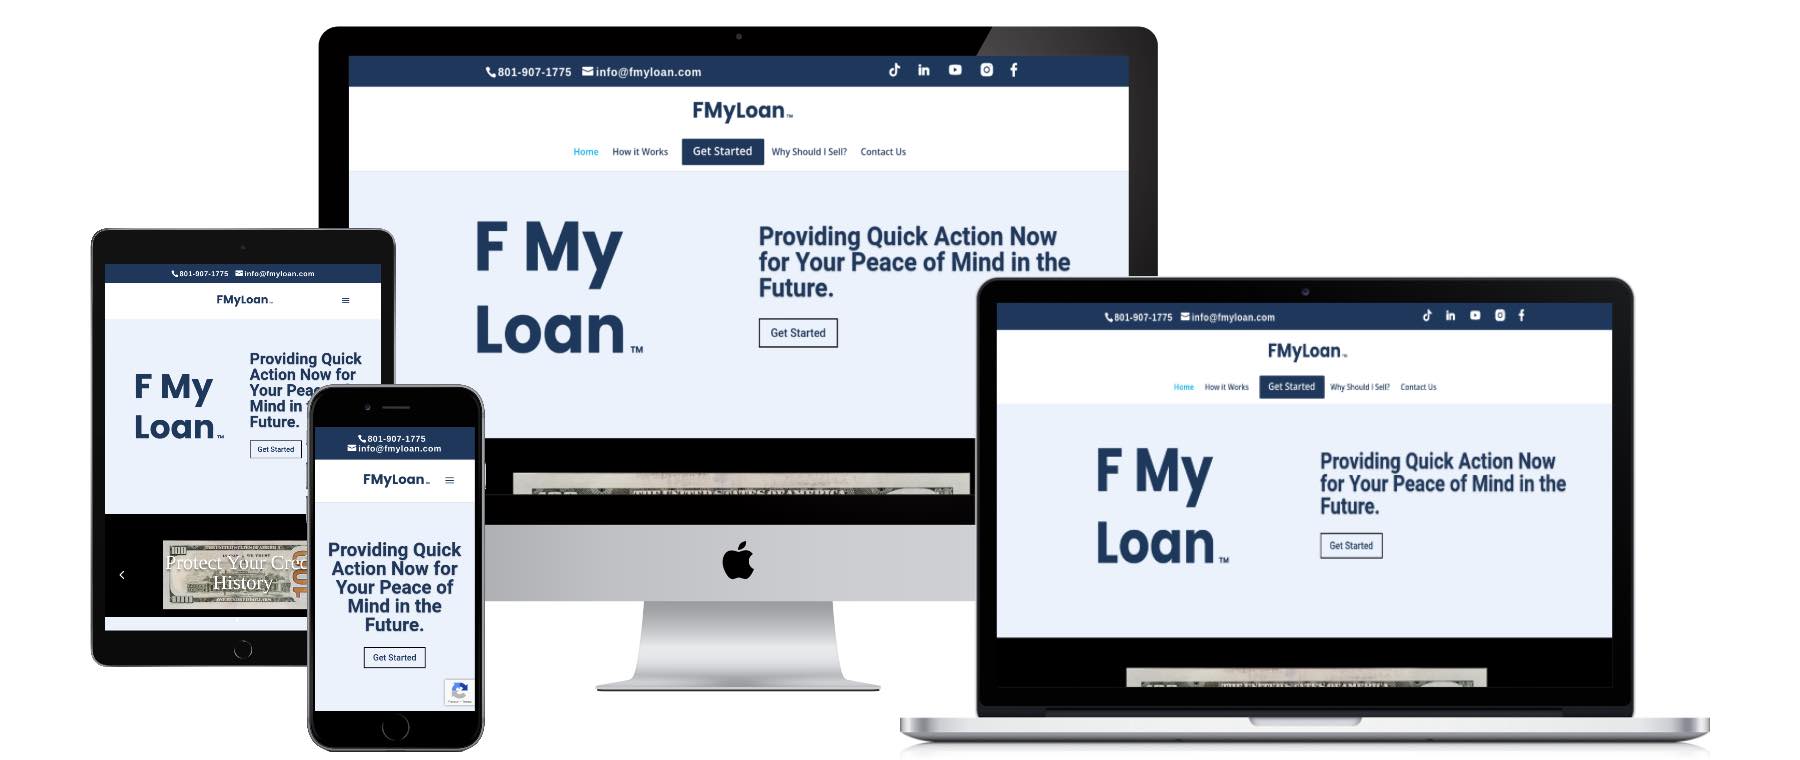 F My Loan